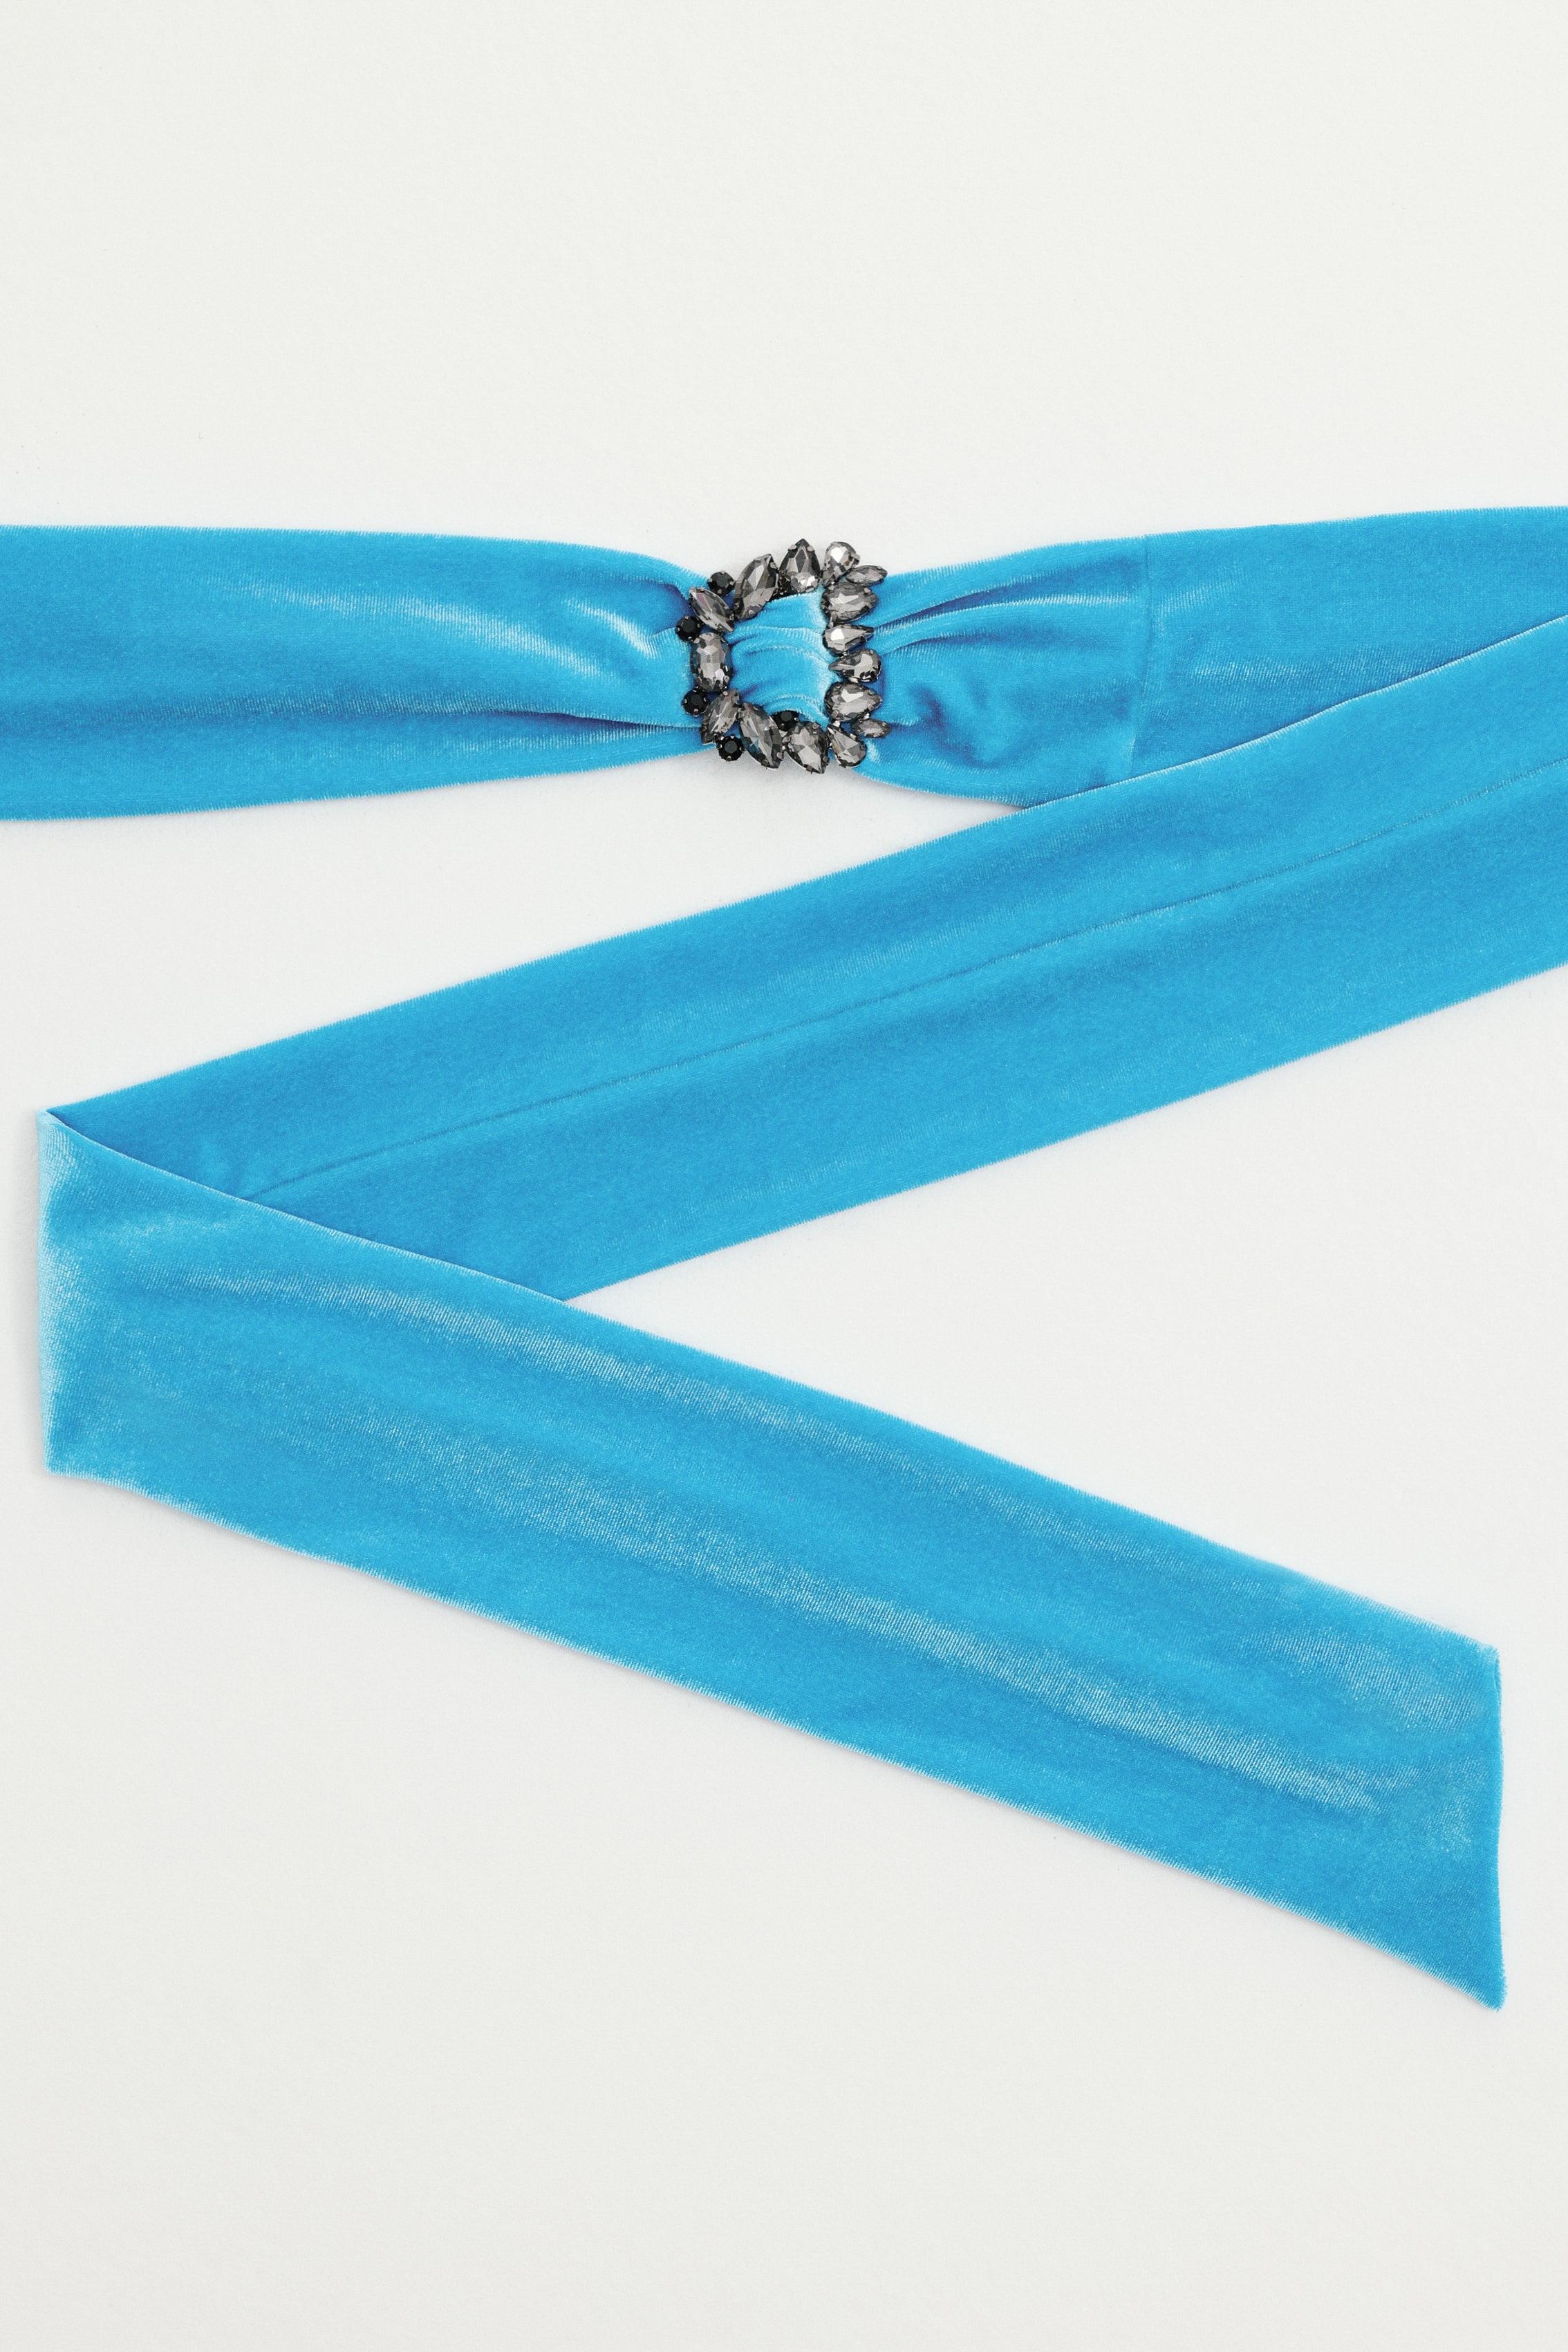 A.I Aqua Blue Velvet buckled scarf